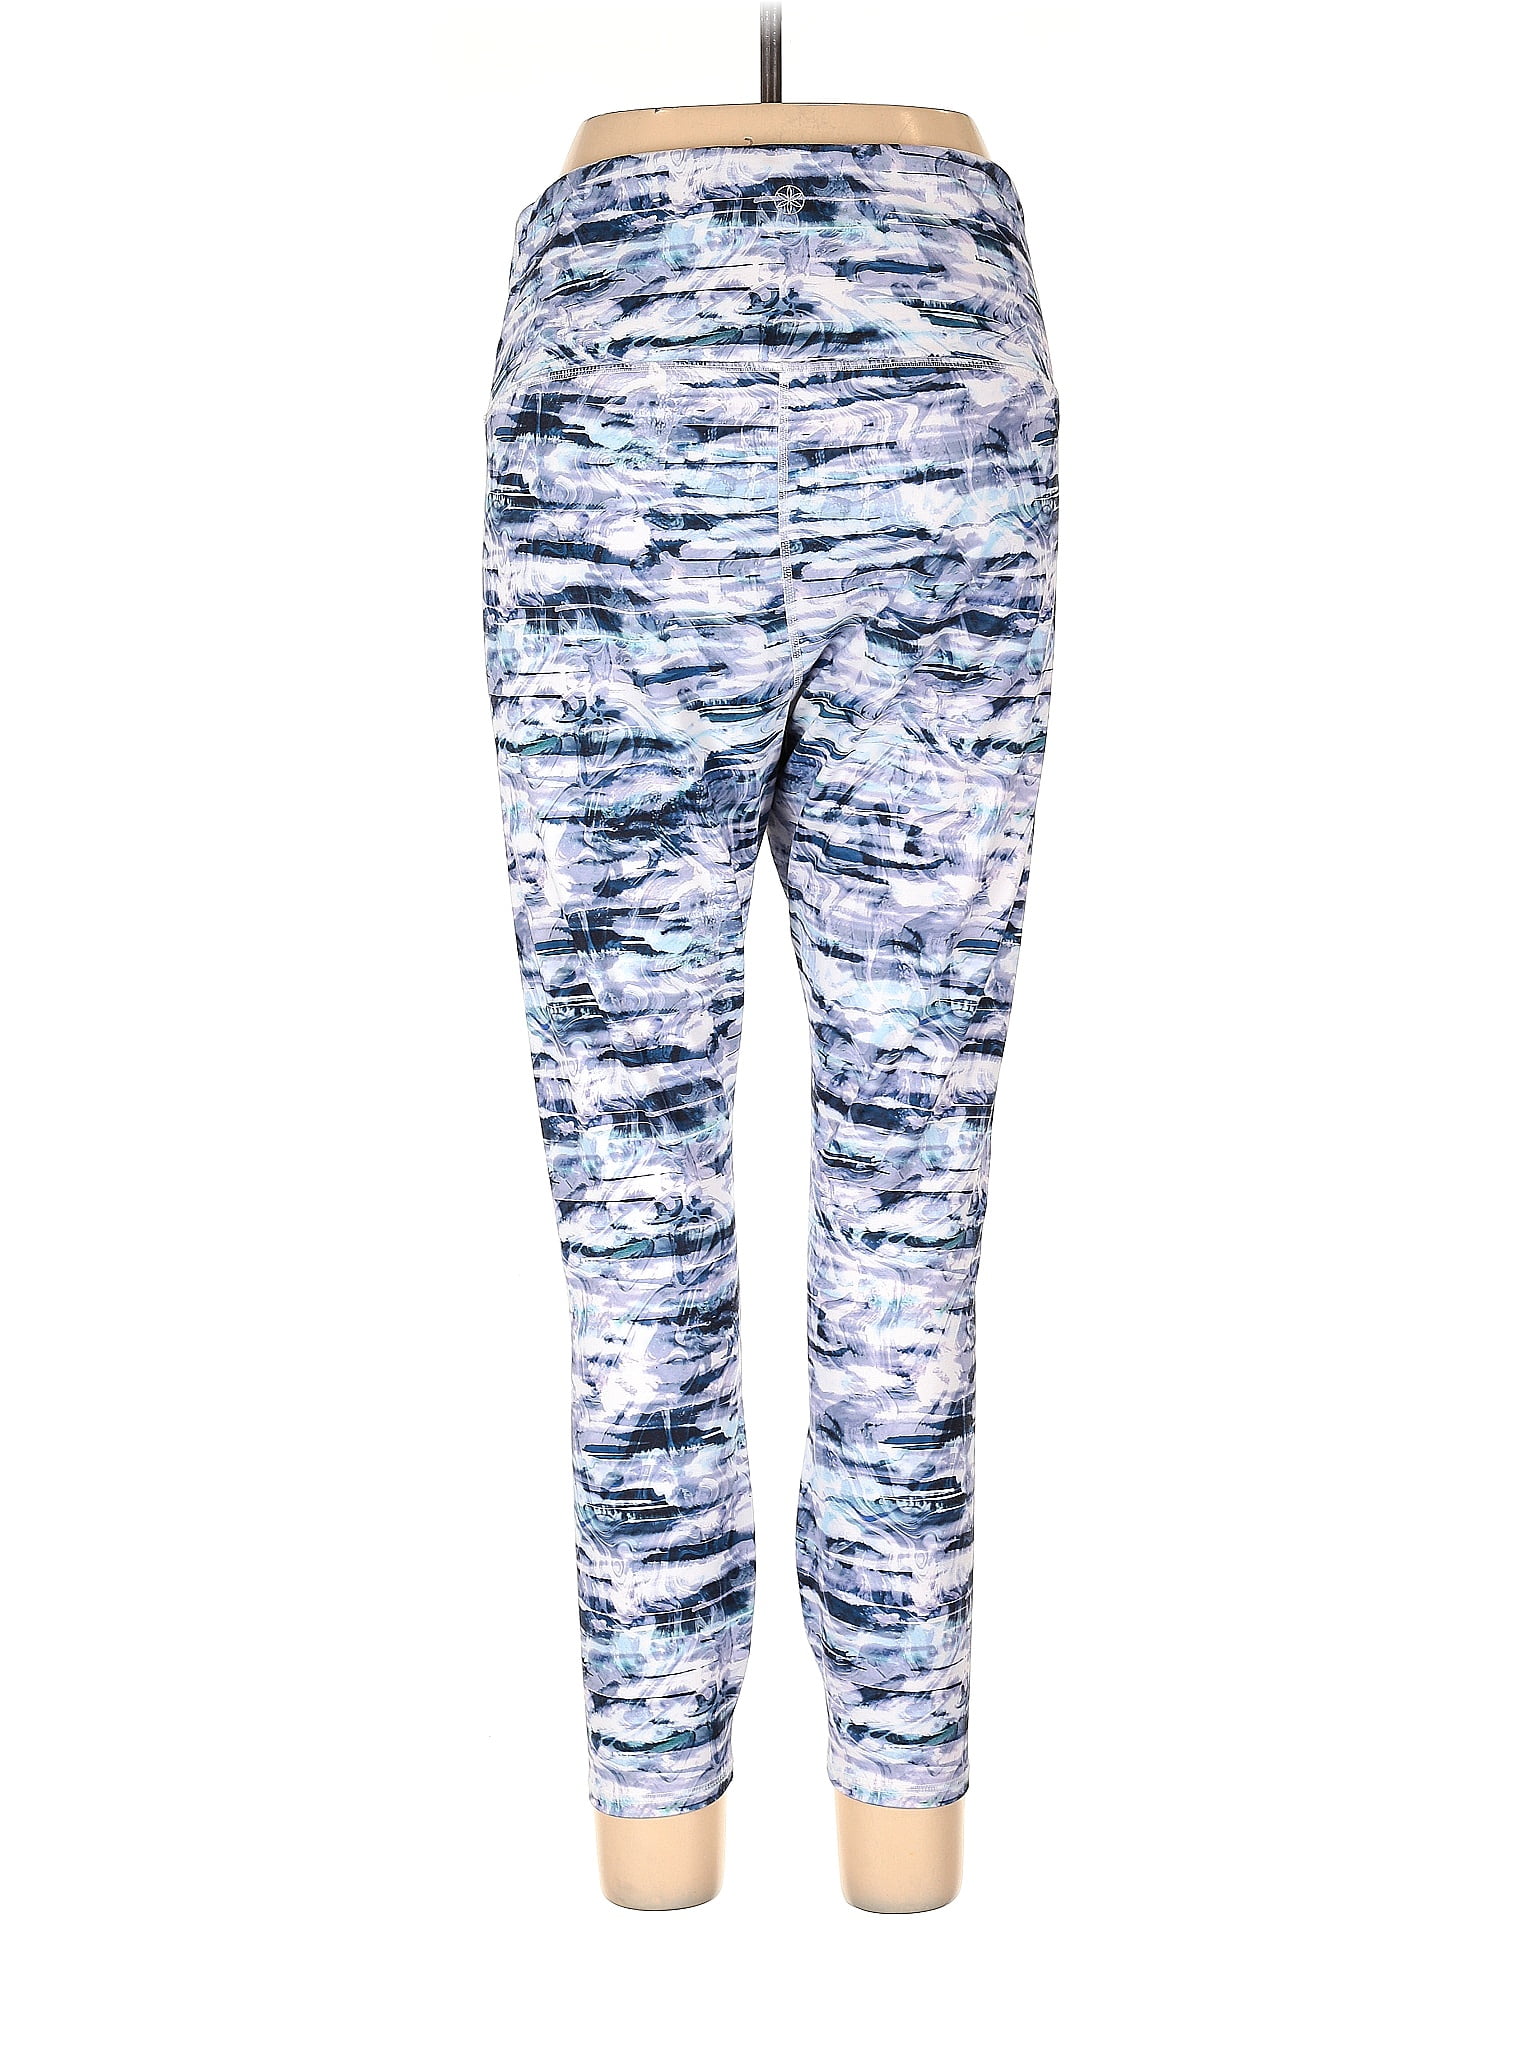 GAIAM Solid Blue Active Pants Size S - 55% off